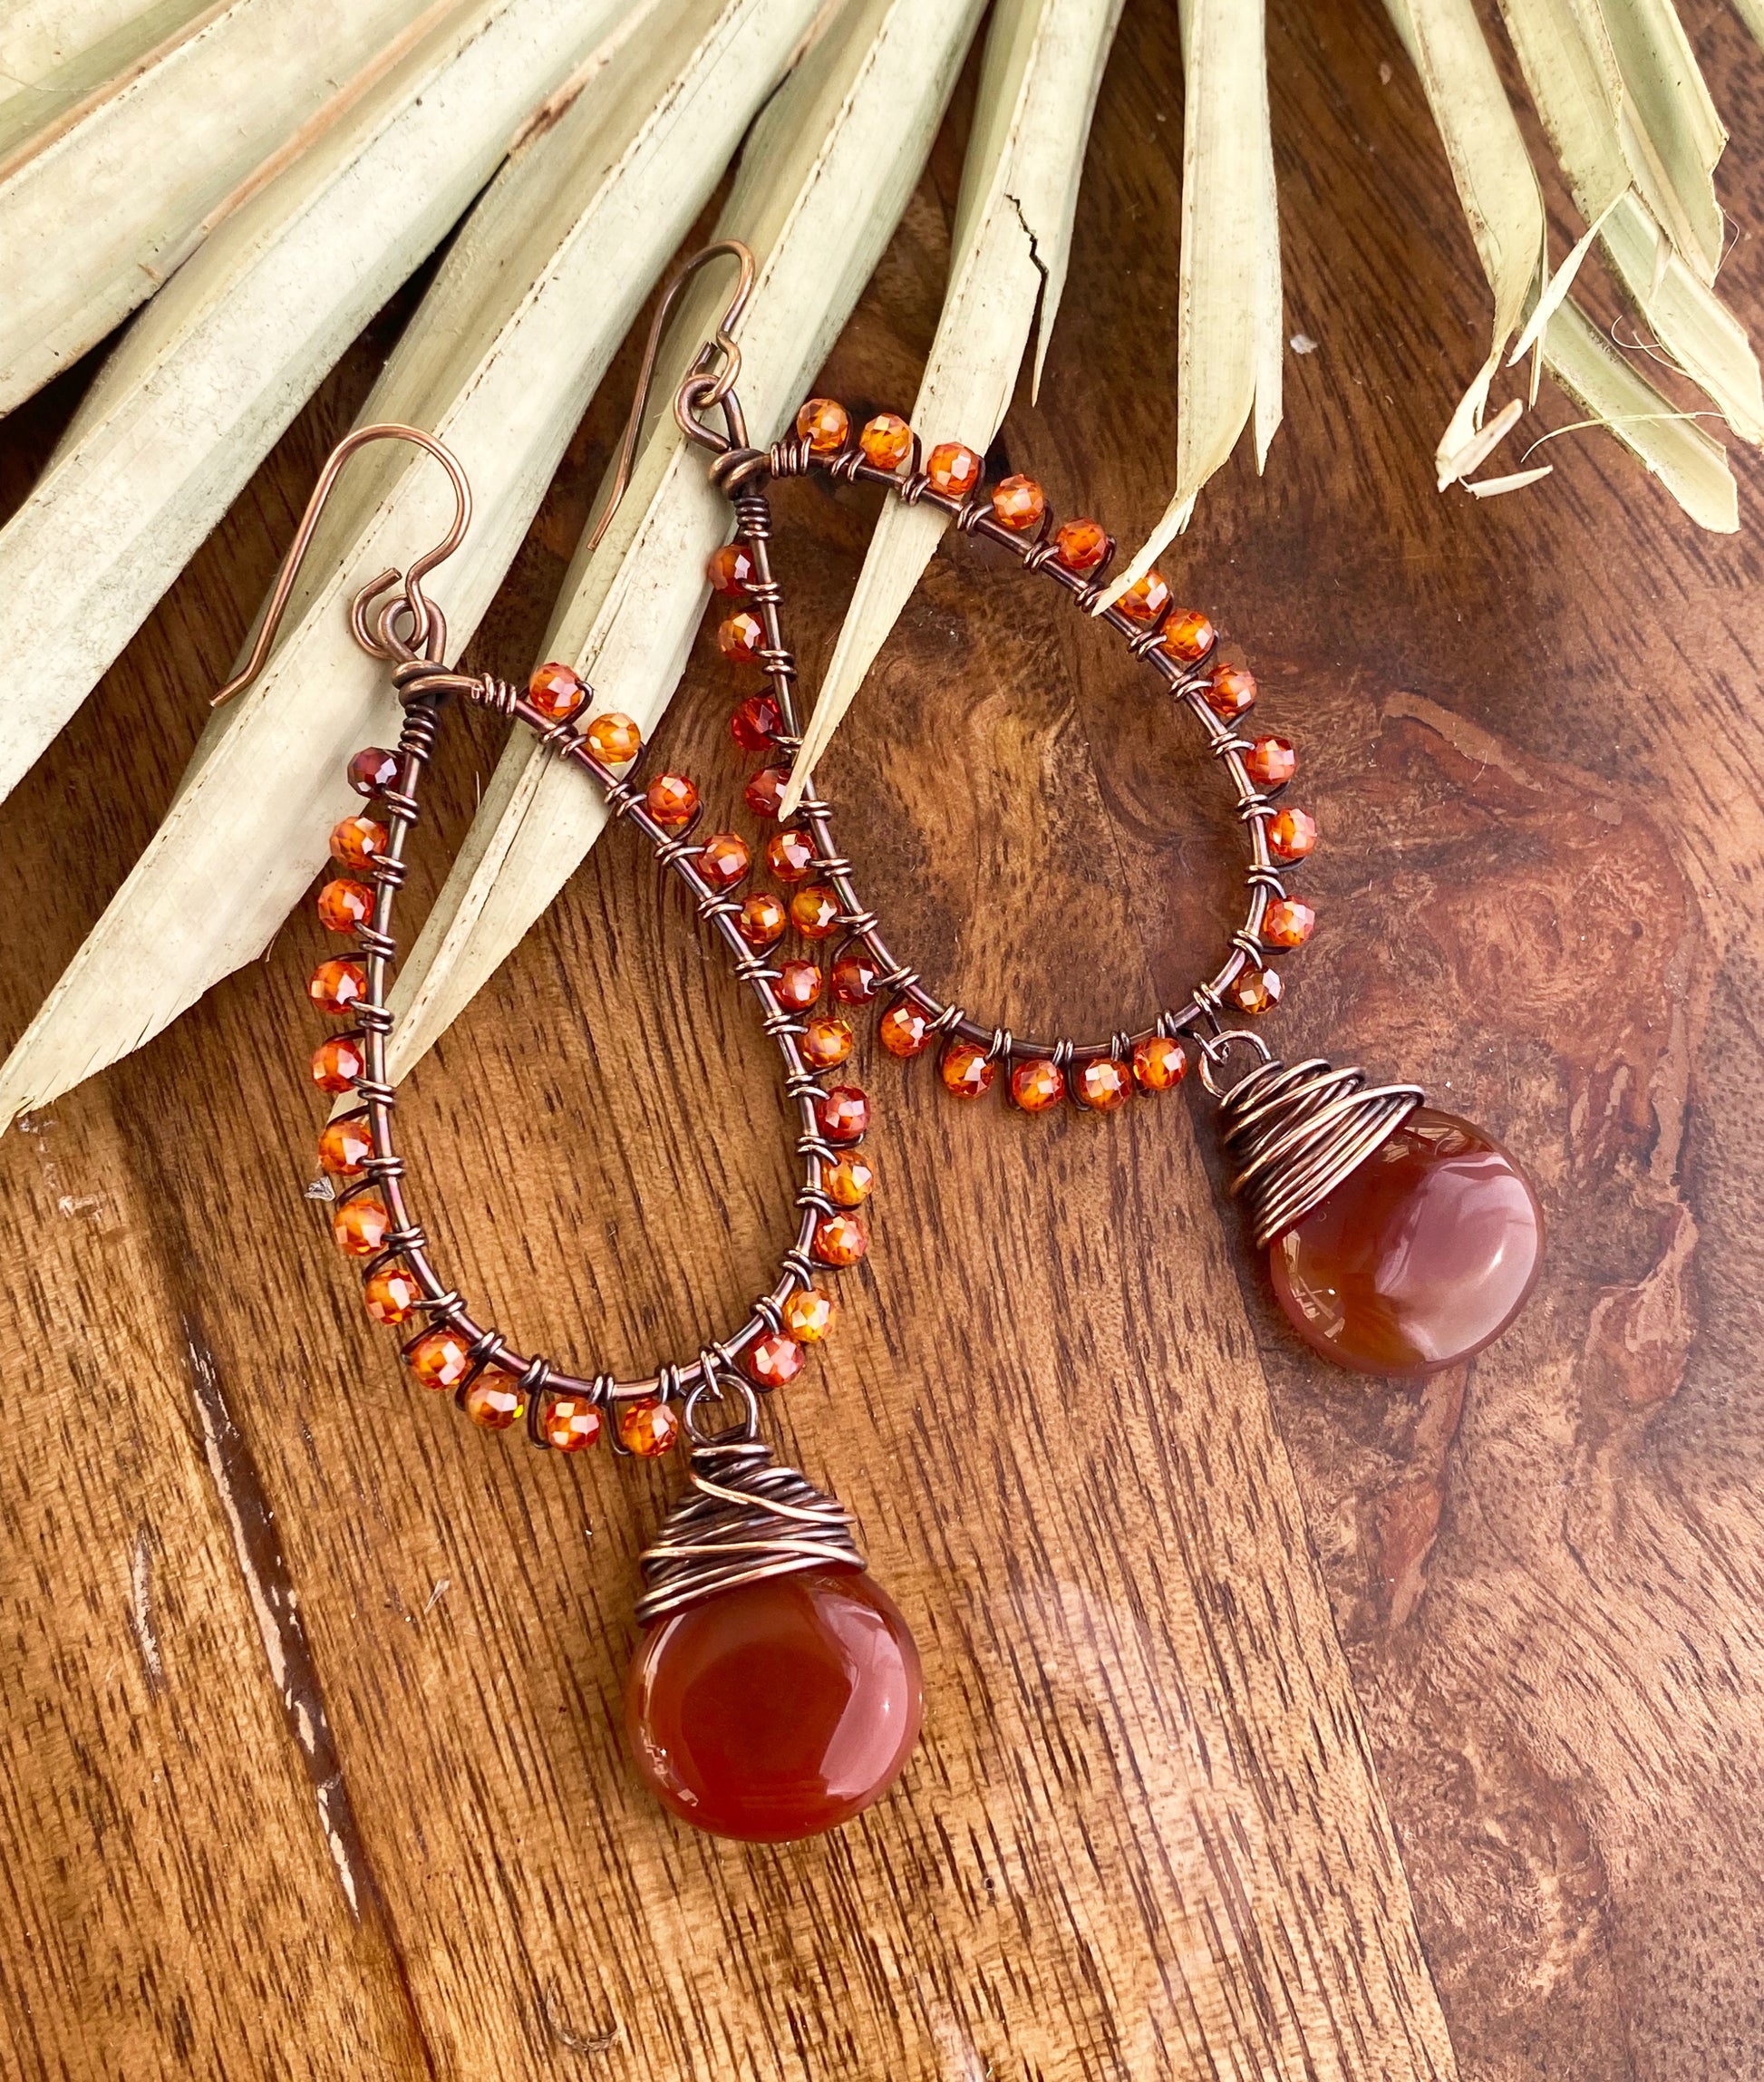 Orange leaves. Carnelian agate stone, copper metal, wire wrapped, earrings - Andria Bieber Designs 